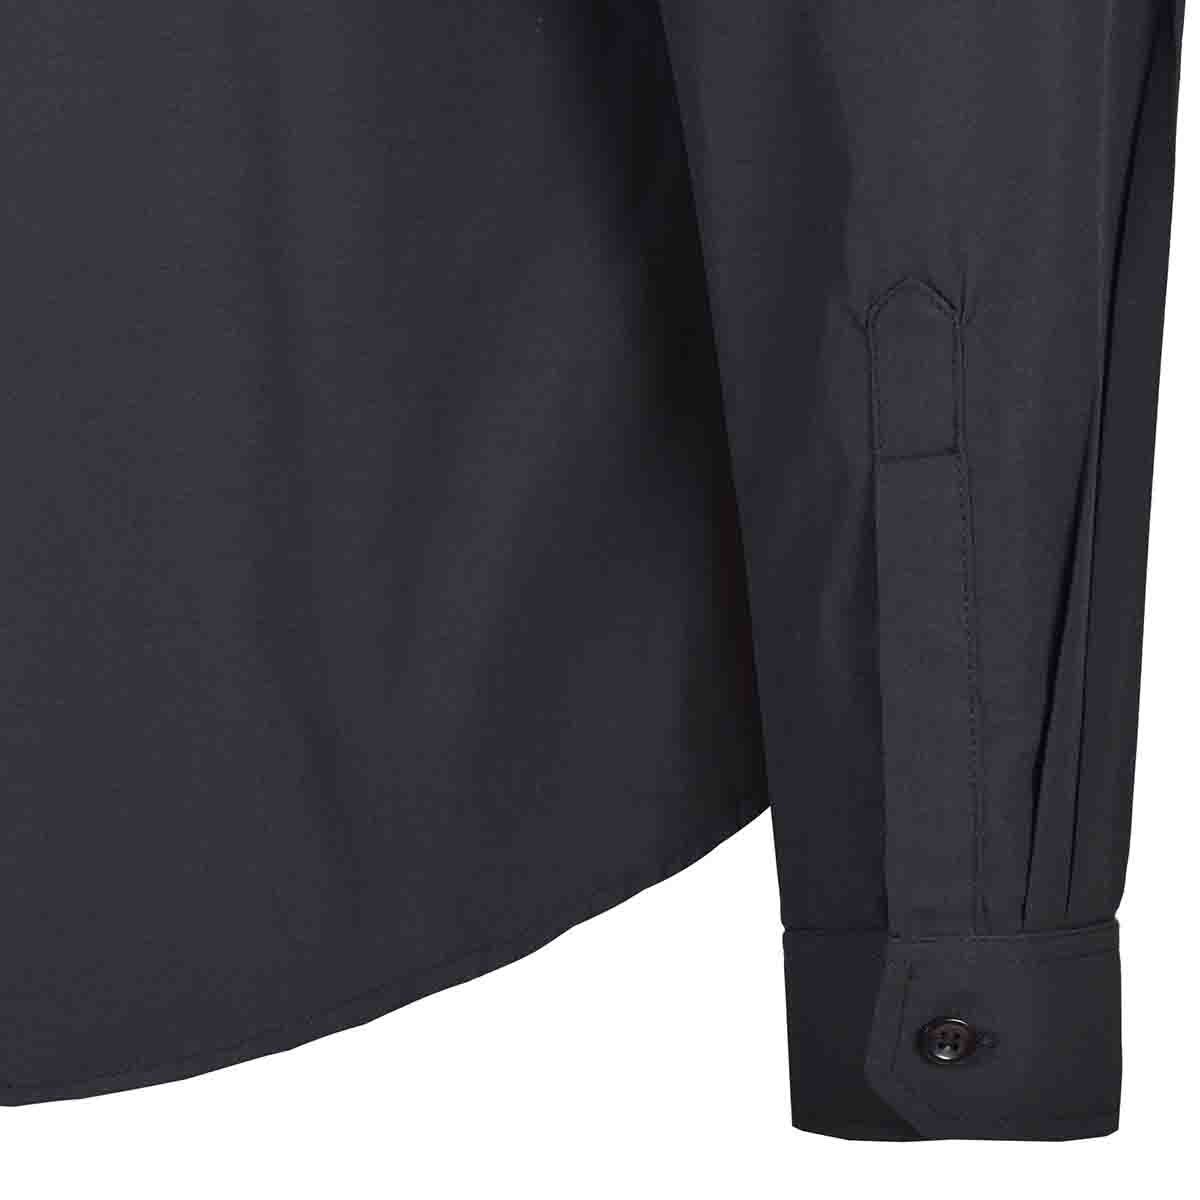 Camisa Juvenil Slim Fit Manga Larga Estampada Color Negro Hardpepper para Caballero